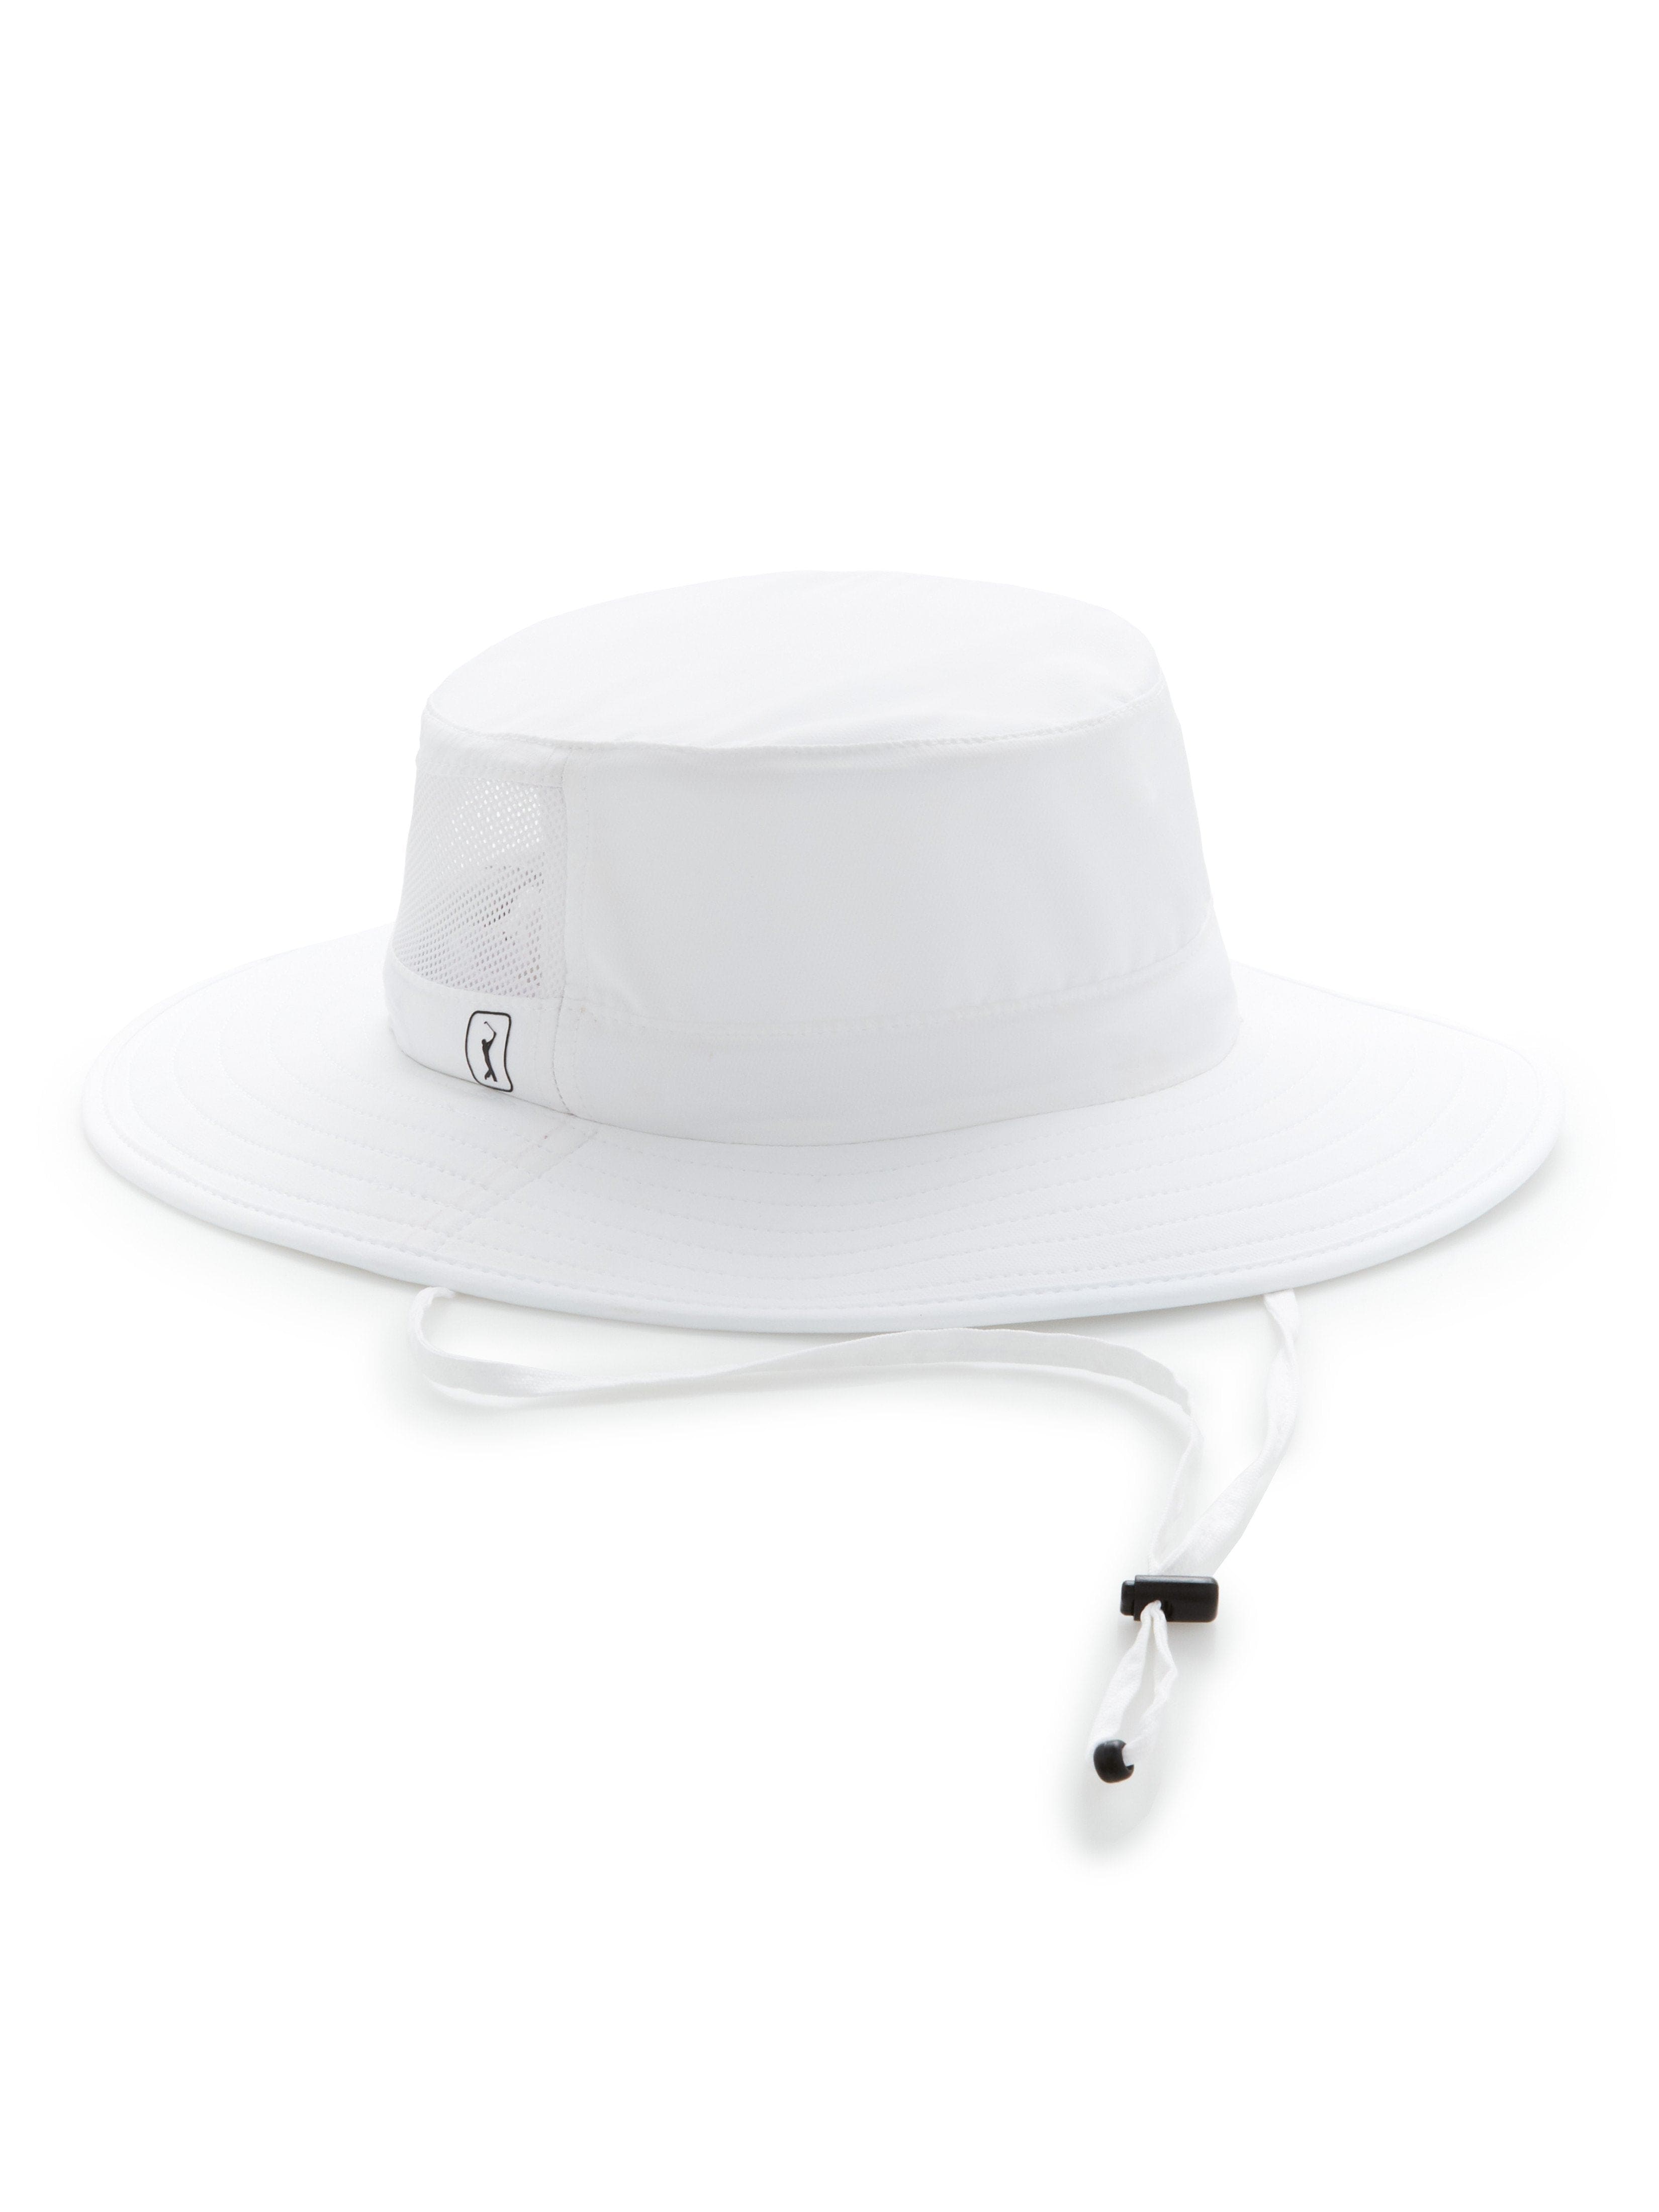 PGA TOUR Apparel Solar Boonie Hat, White, 100% Polyester | Golf Apparel Shop